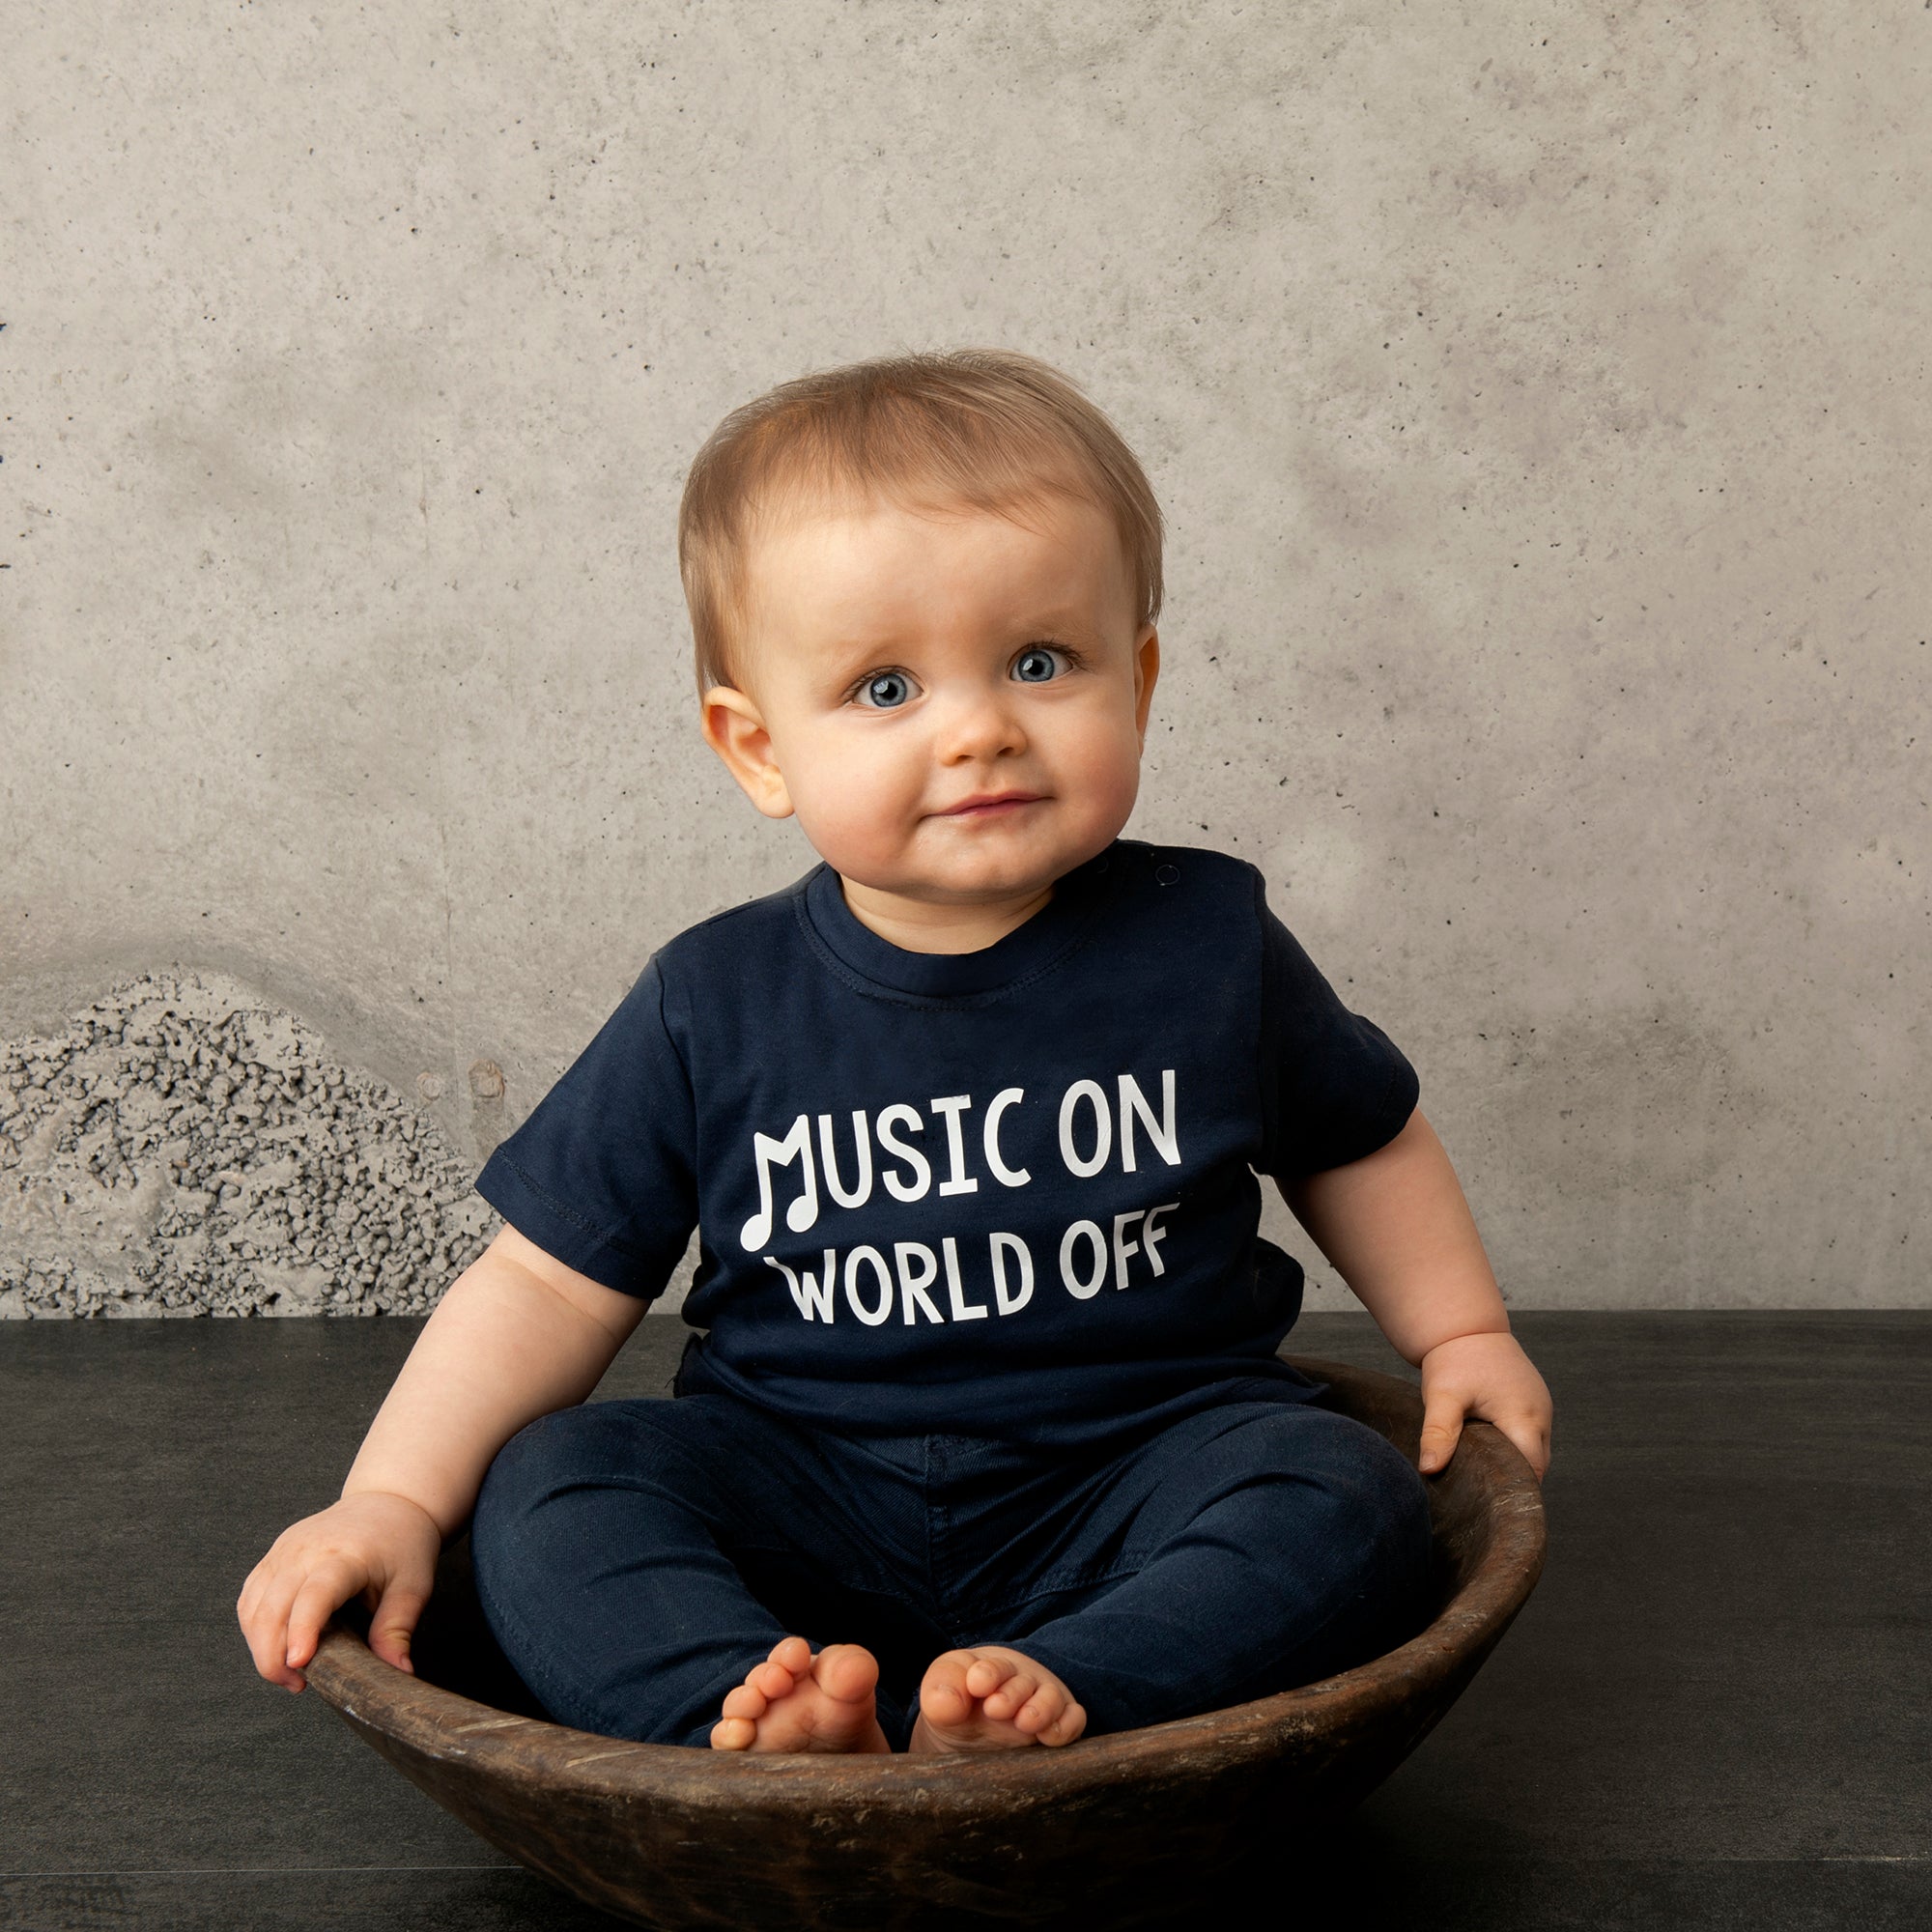 'Music on - World off' baby shirt met korte mouwen